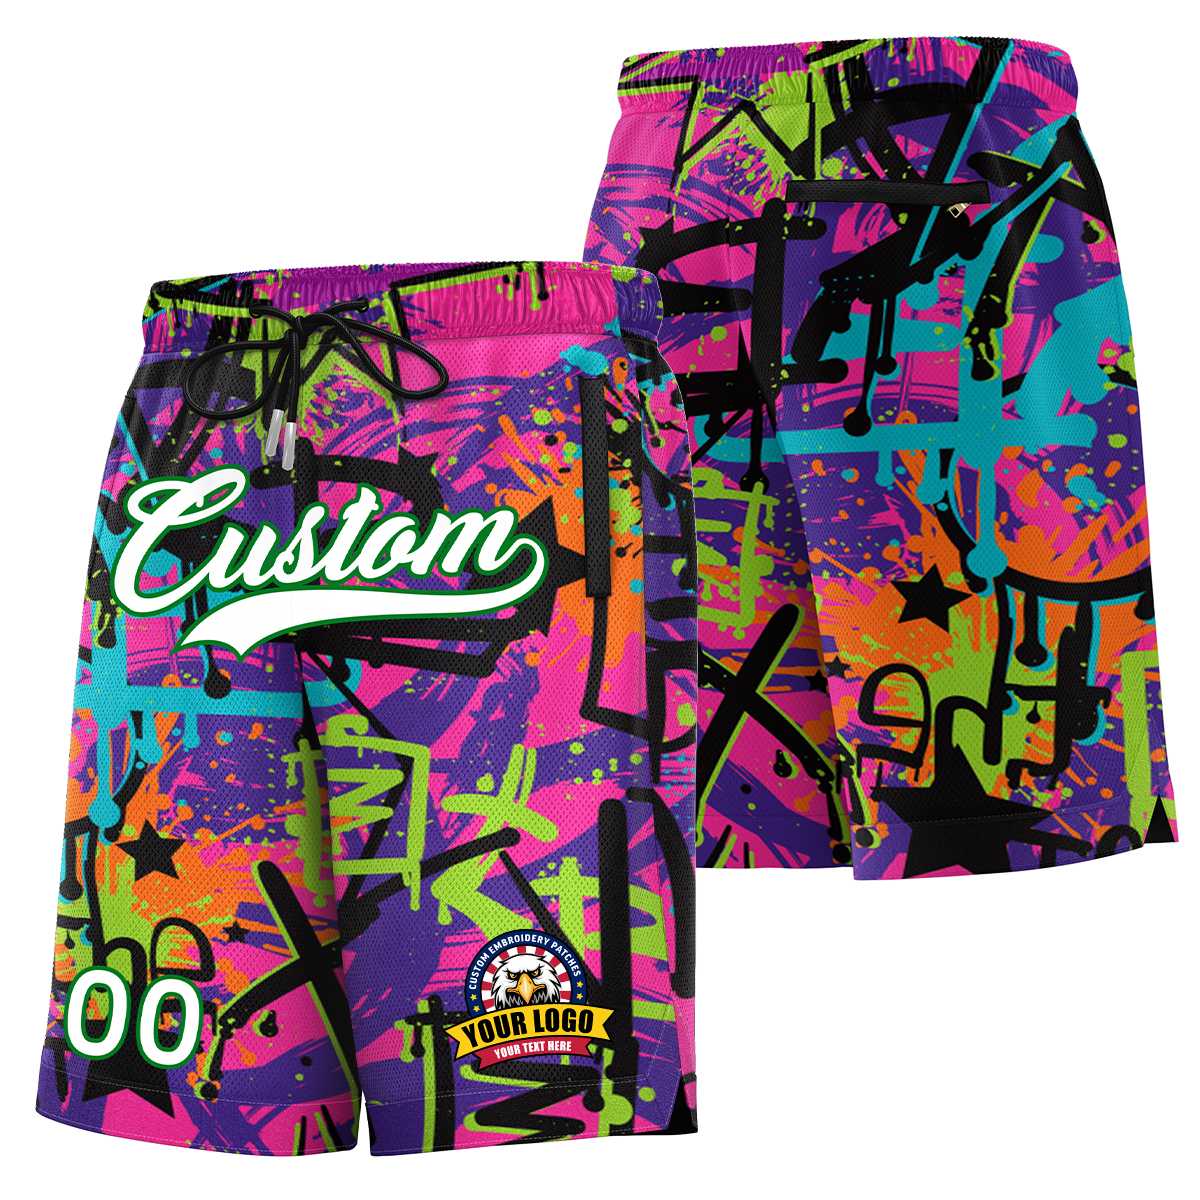 kxk custom graffiti pattern basketball shorts